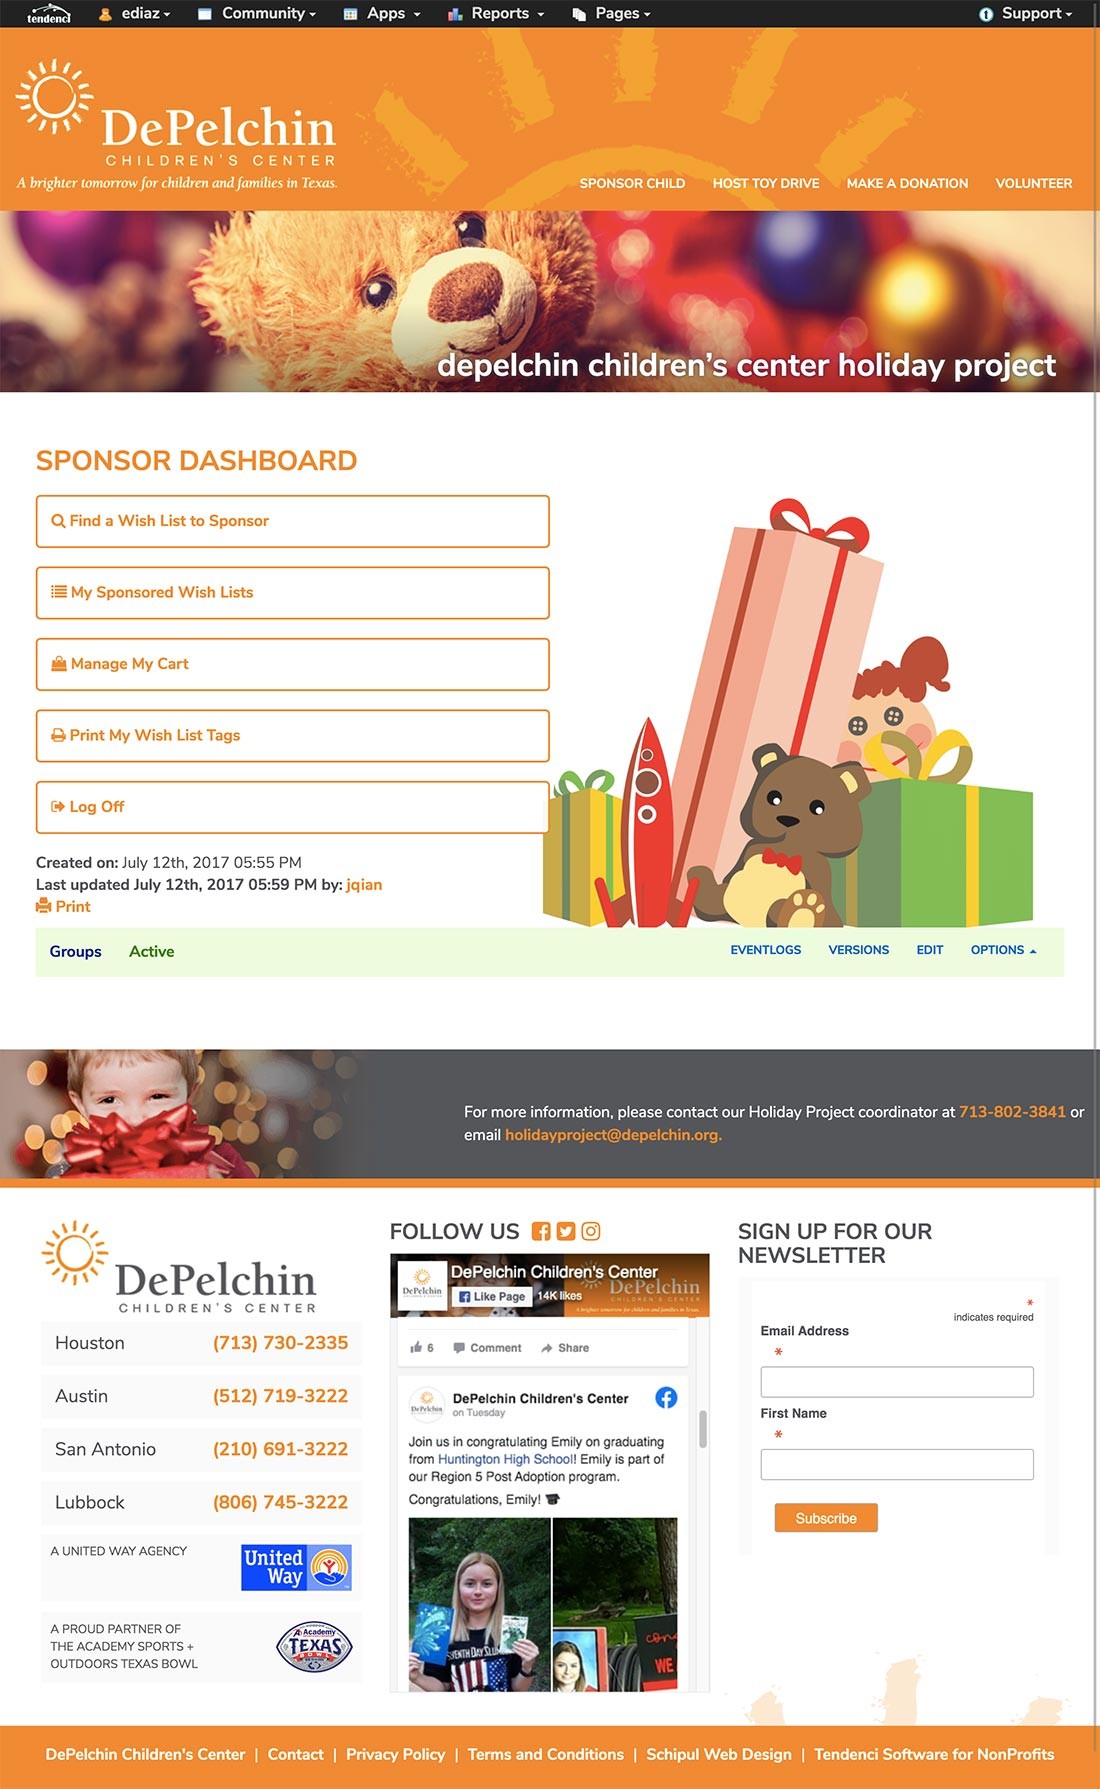 DePelchin Children's Center - Sponsor Dashboard